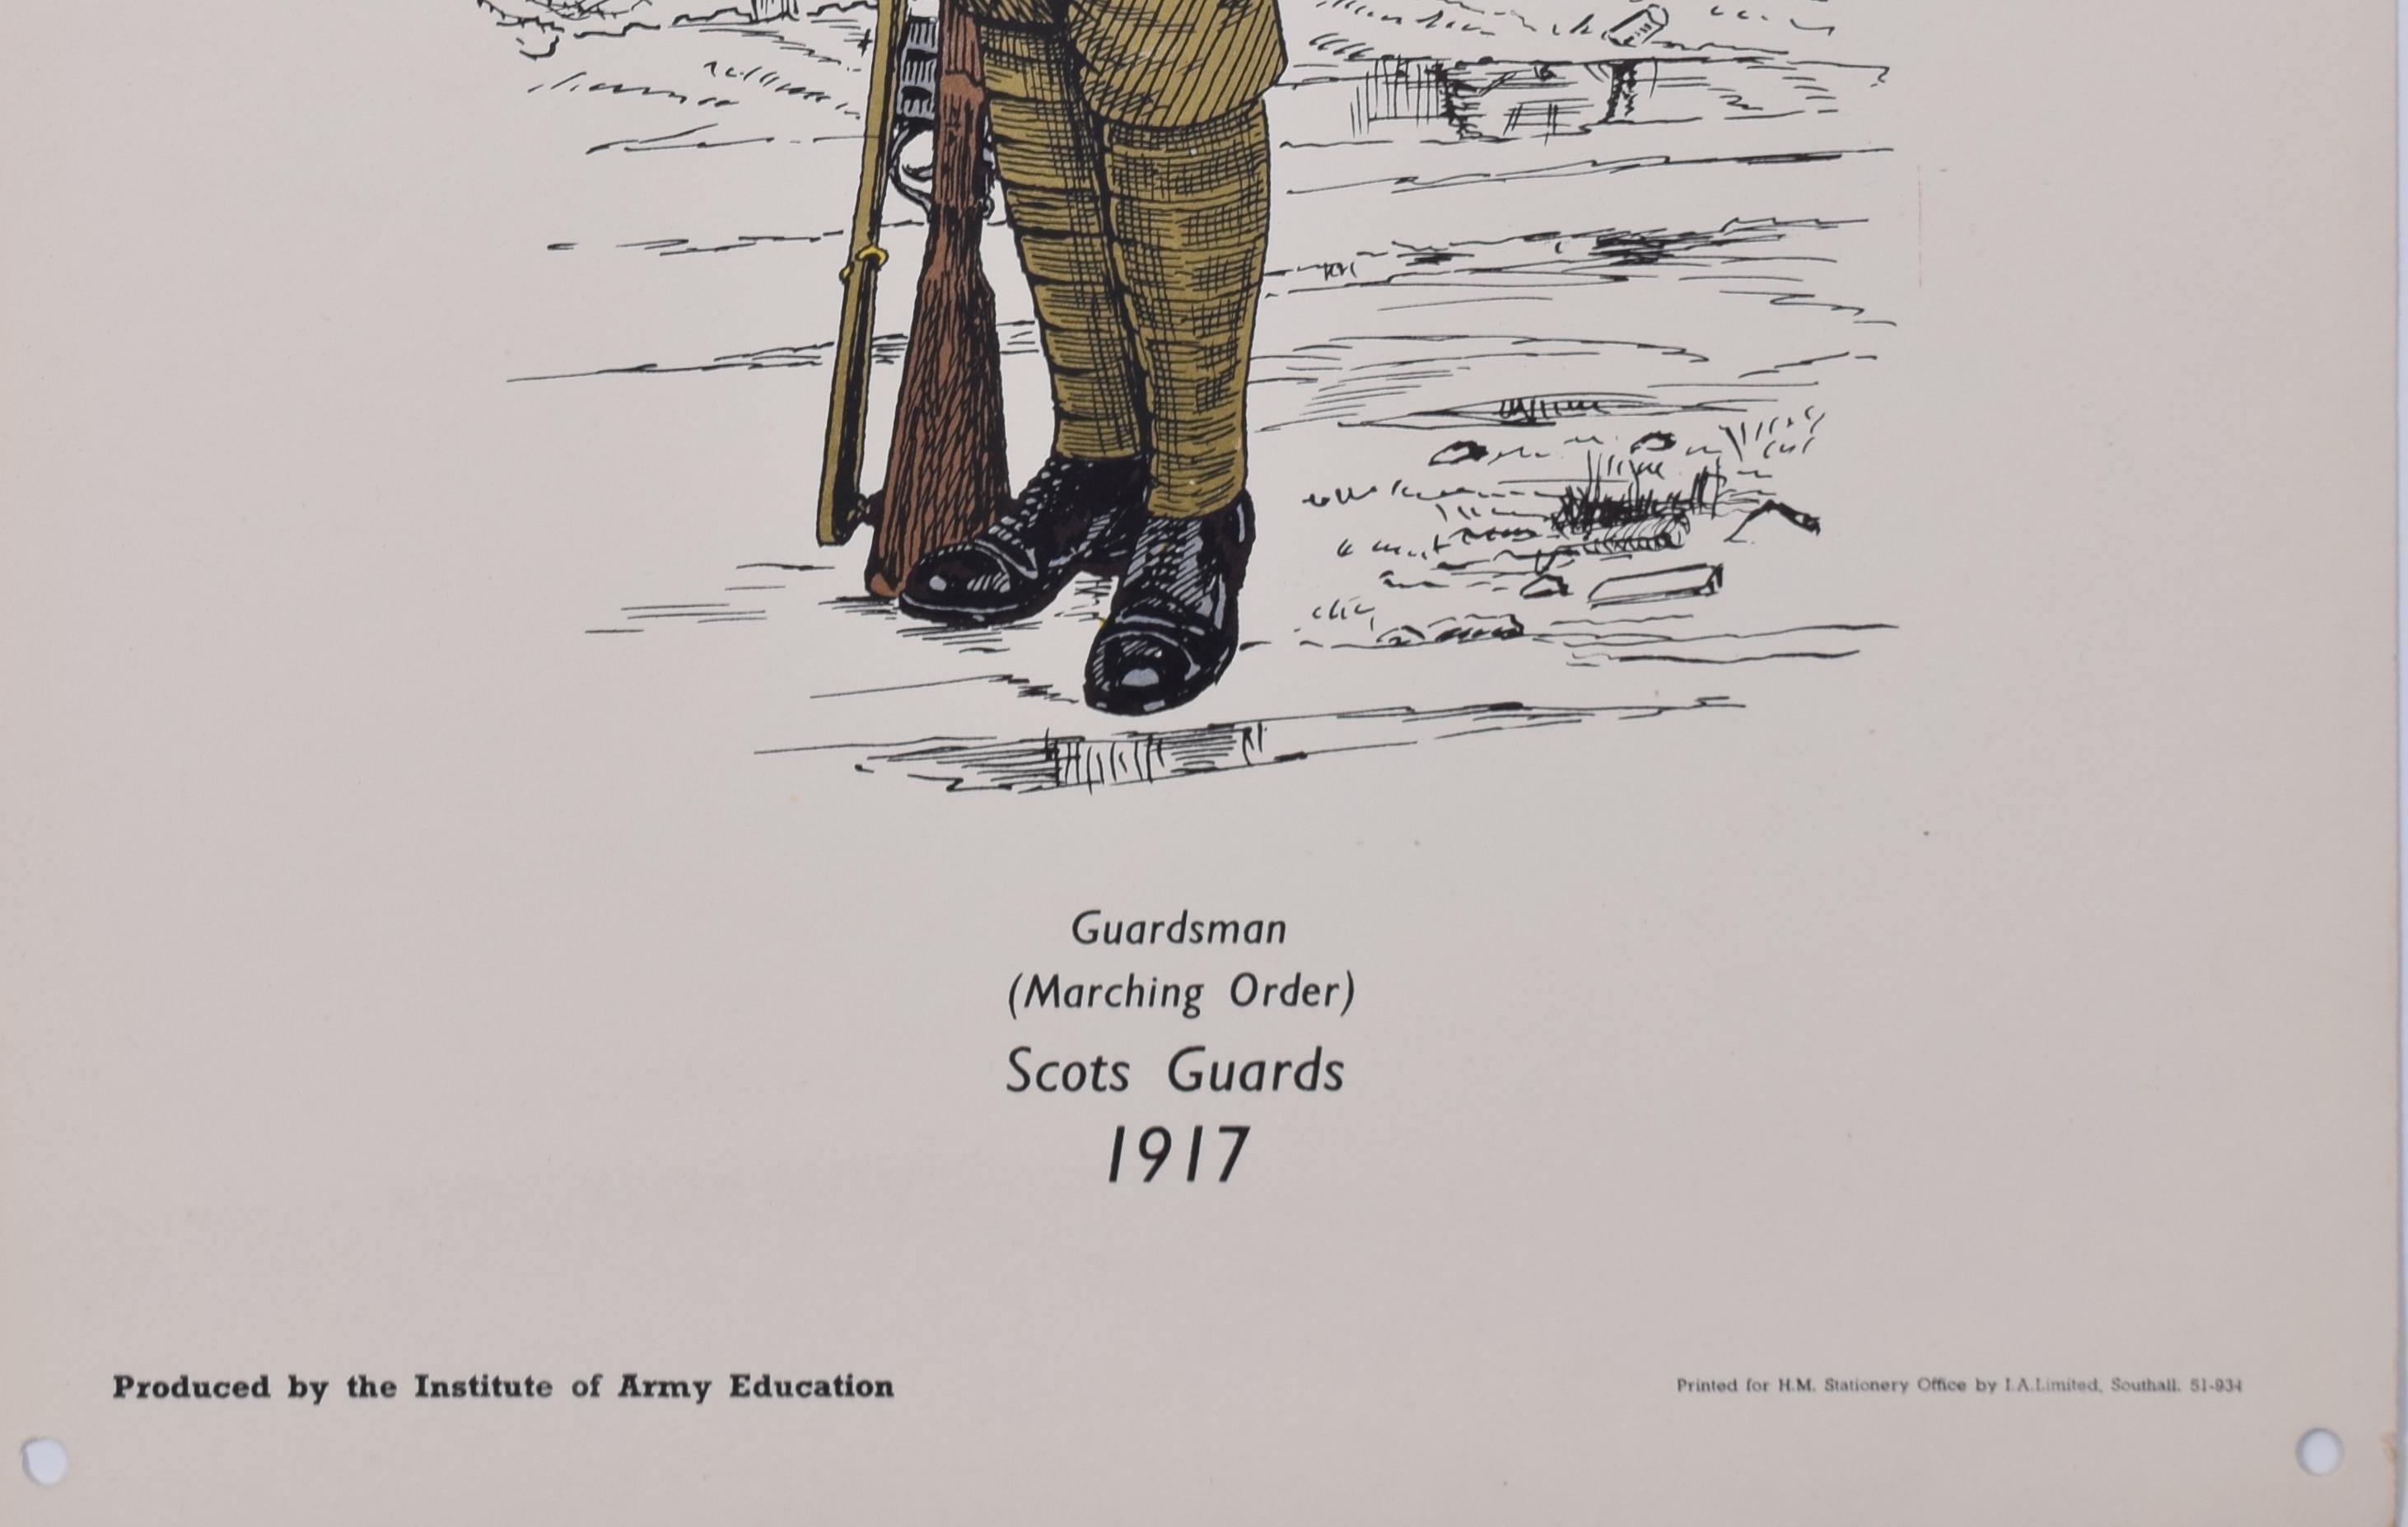 Scots Guards Officer Institute of Army Education, Lithographie der Militäruniform im Angebot 1